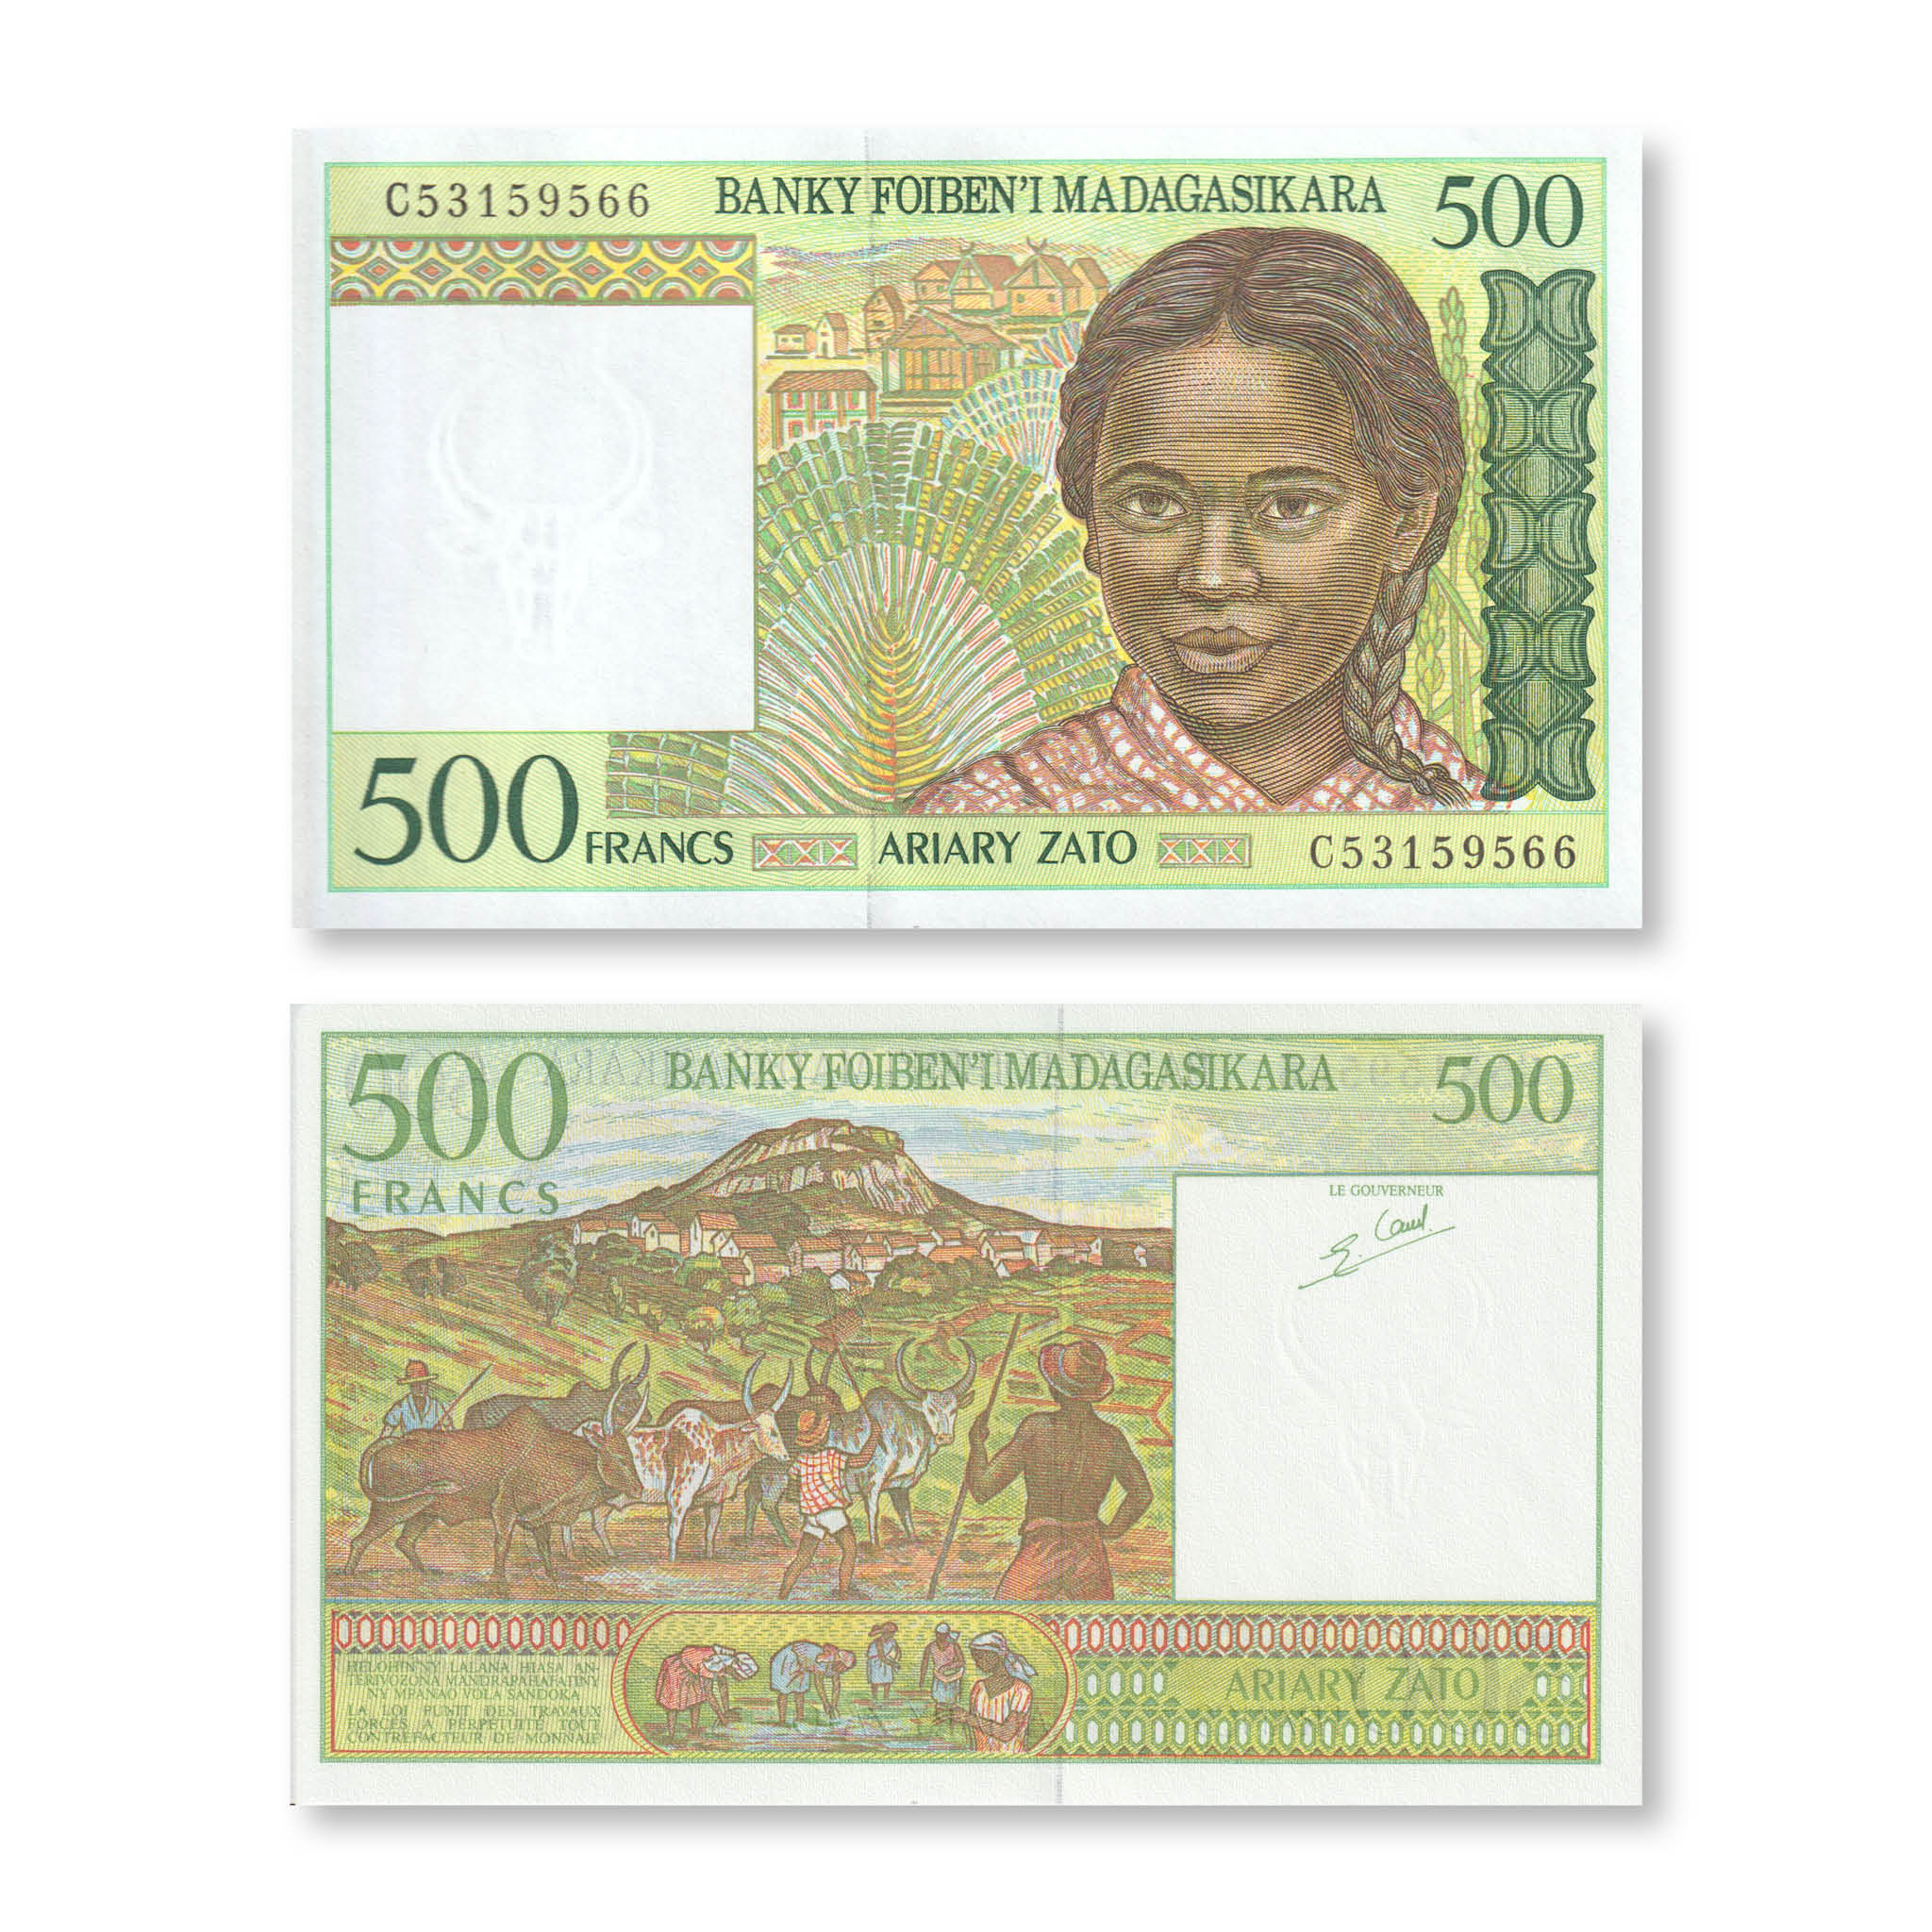 Madagascar 500 Francs, 1994, B311b, P75b, UNC - Robert's World Money - World Banknotes